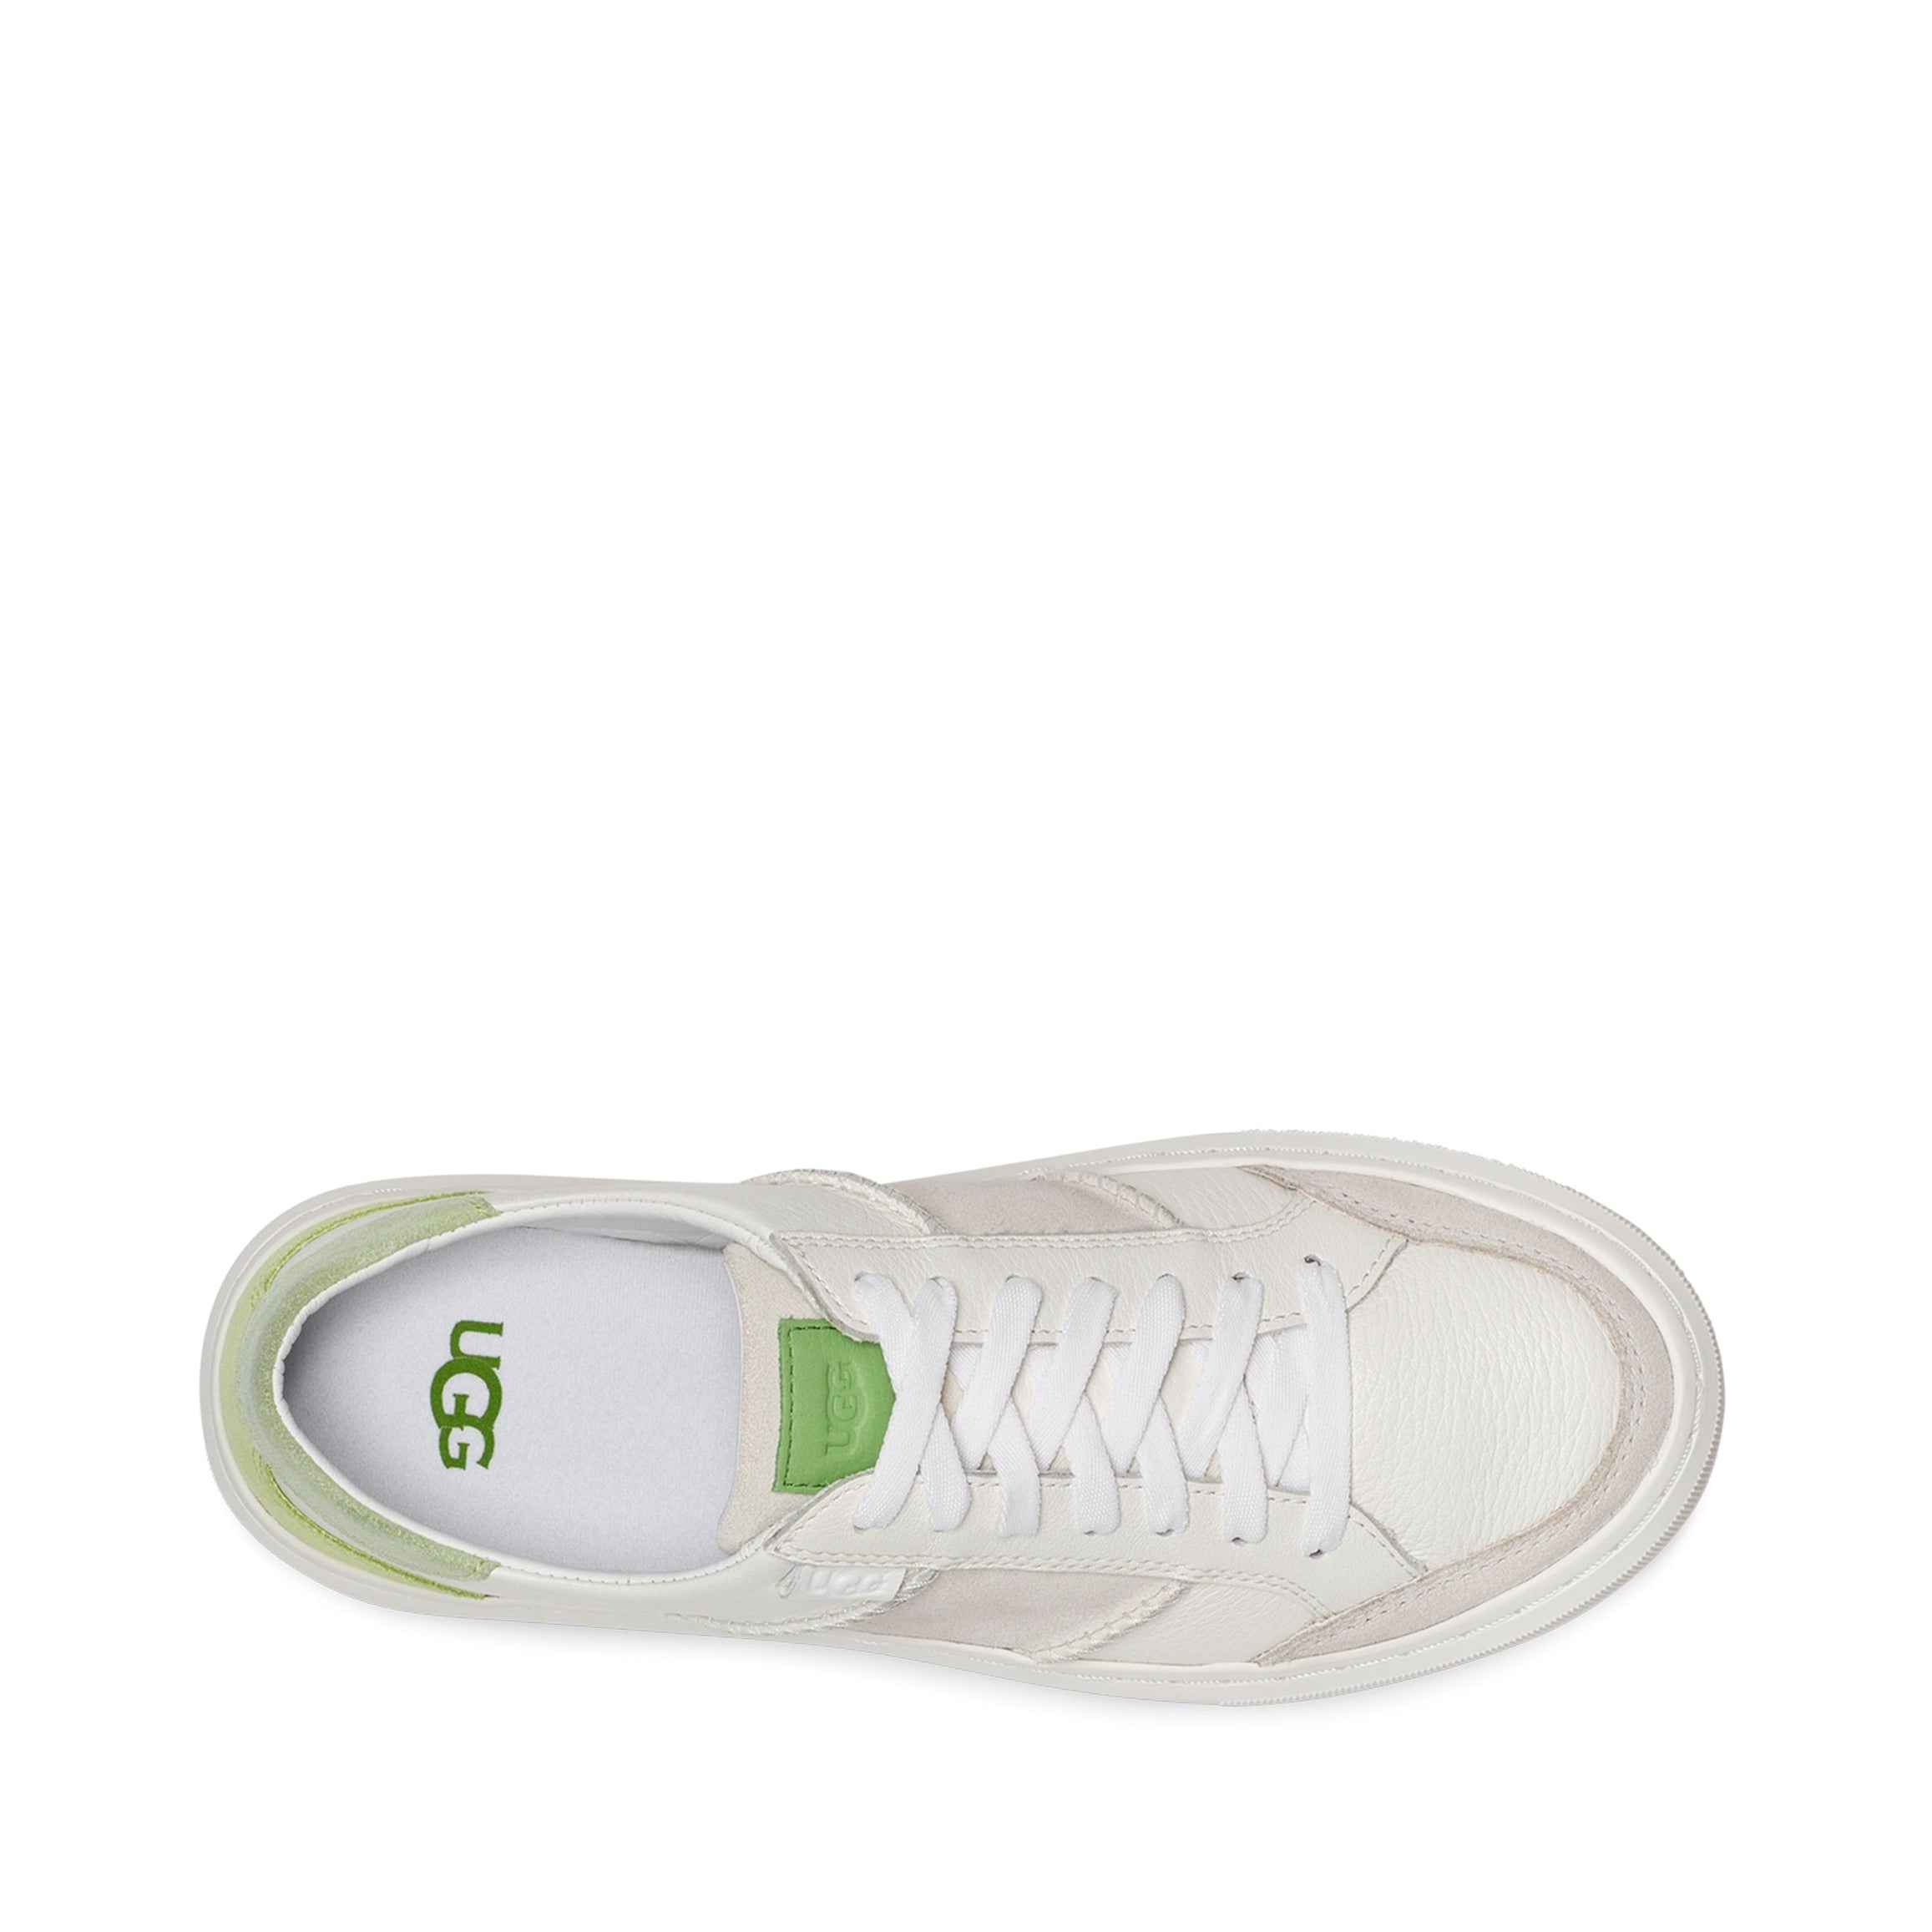 Sample UGG Alameda Lace Sneaker   